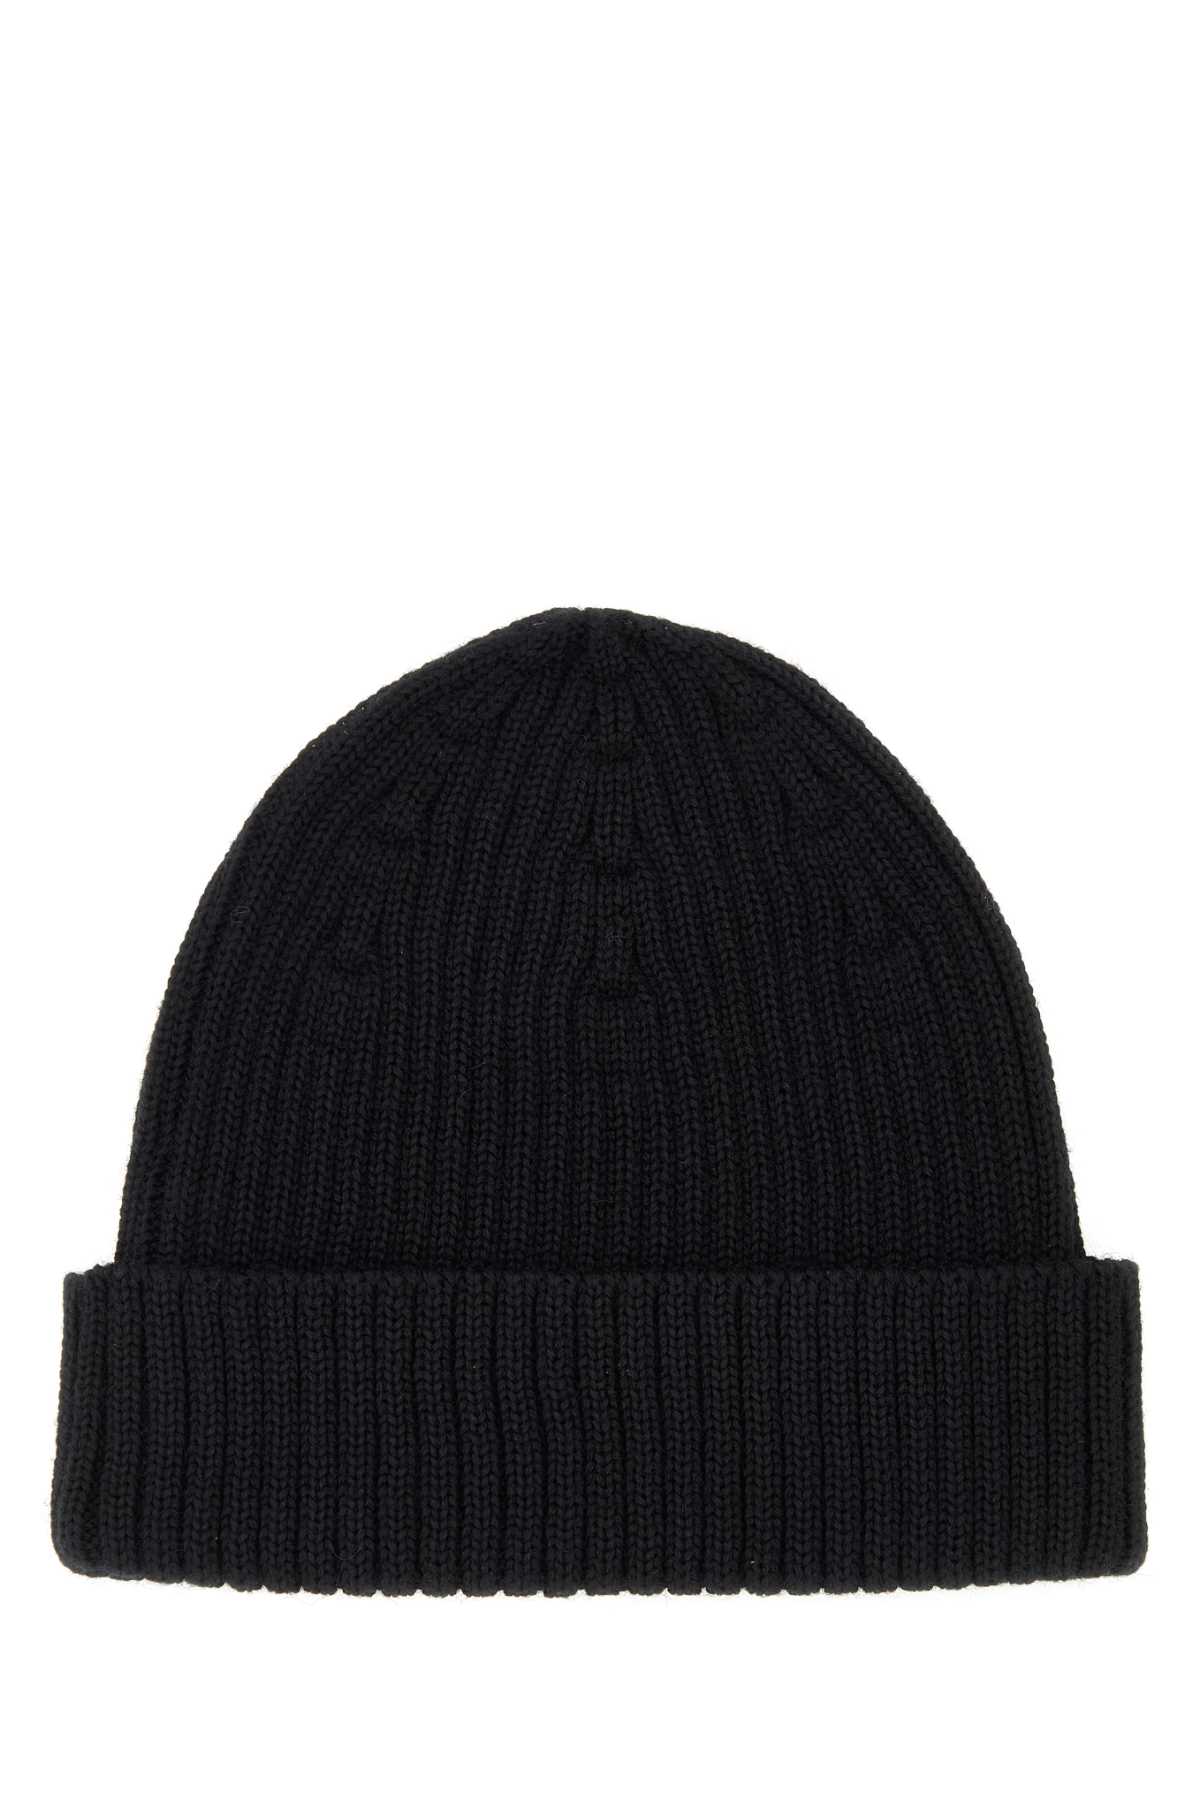 Maison Kitsuné Black Wool Beanie Hat